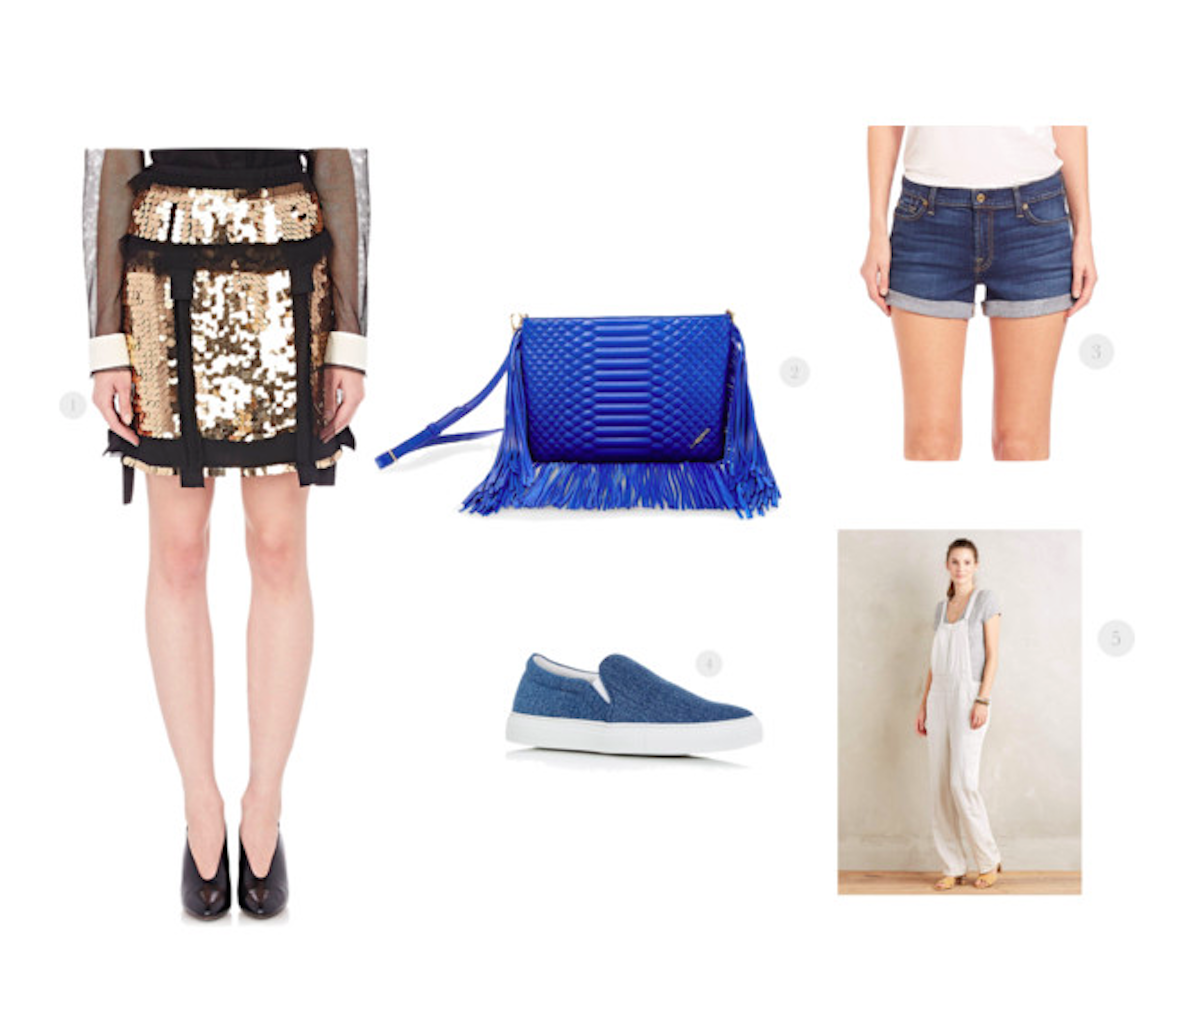 pinterest-instagram-pslilyboutique-la-fashion-blogger-best-top-summer-2016-outfit-ideas-sales-collage-7-8-16